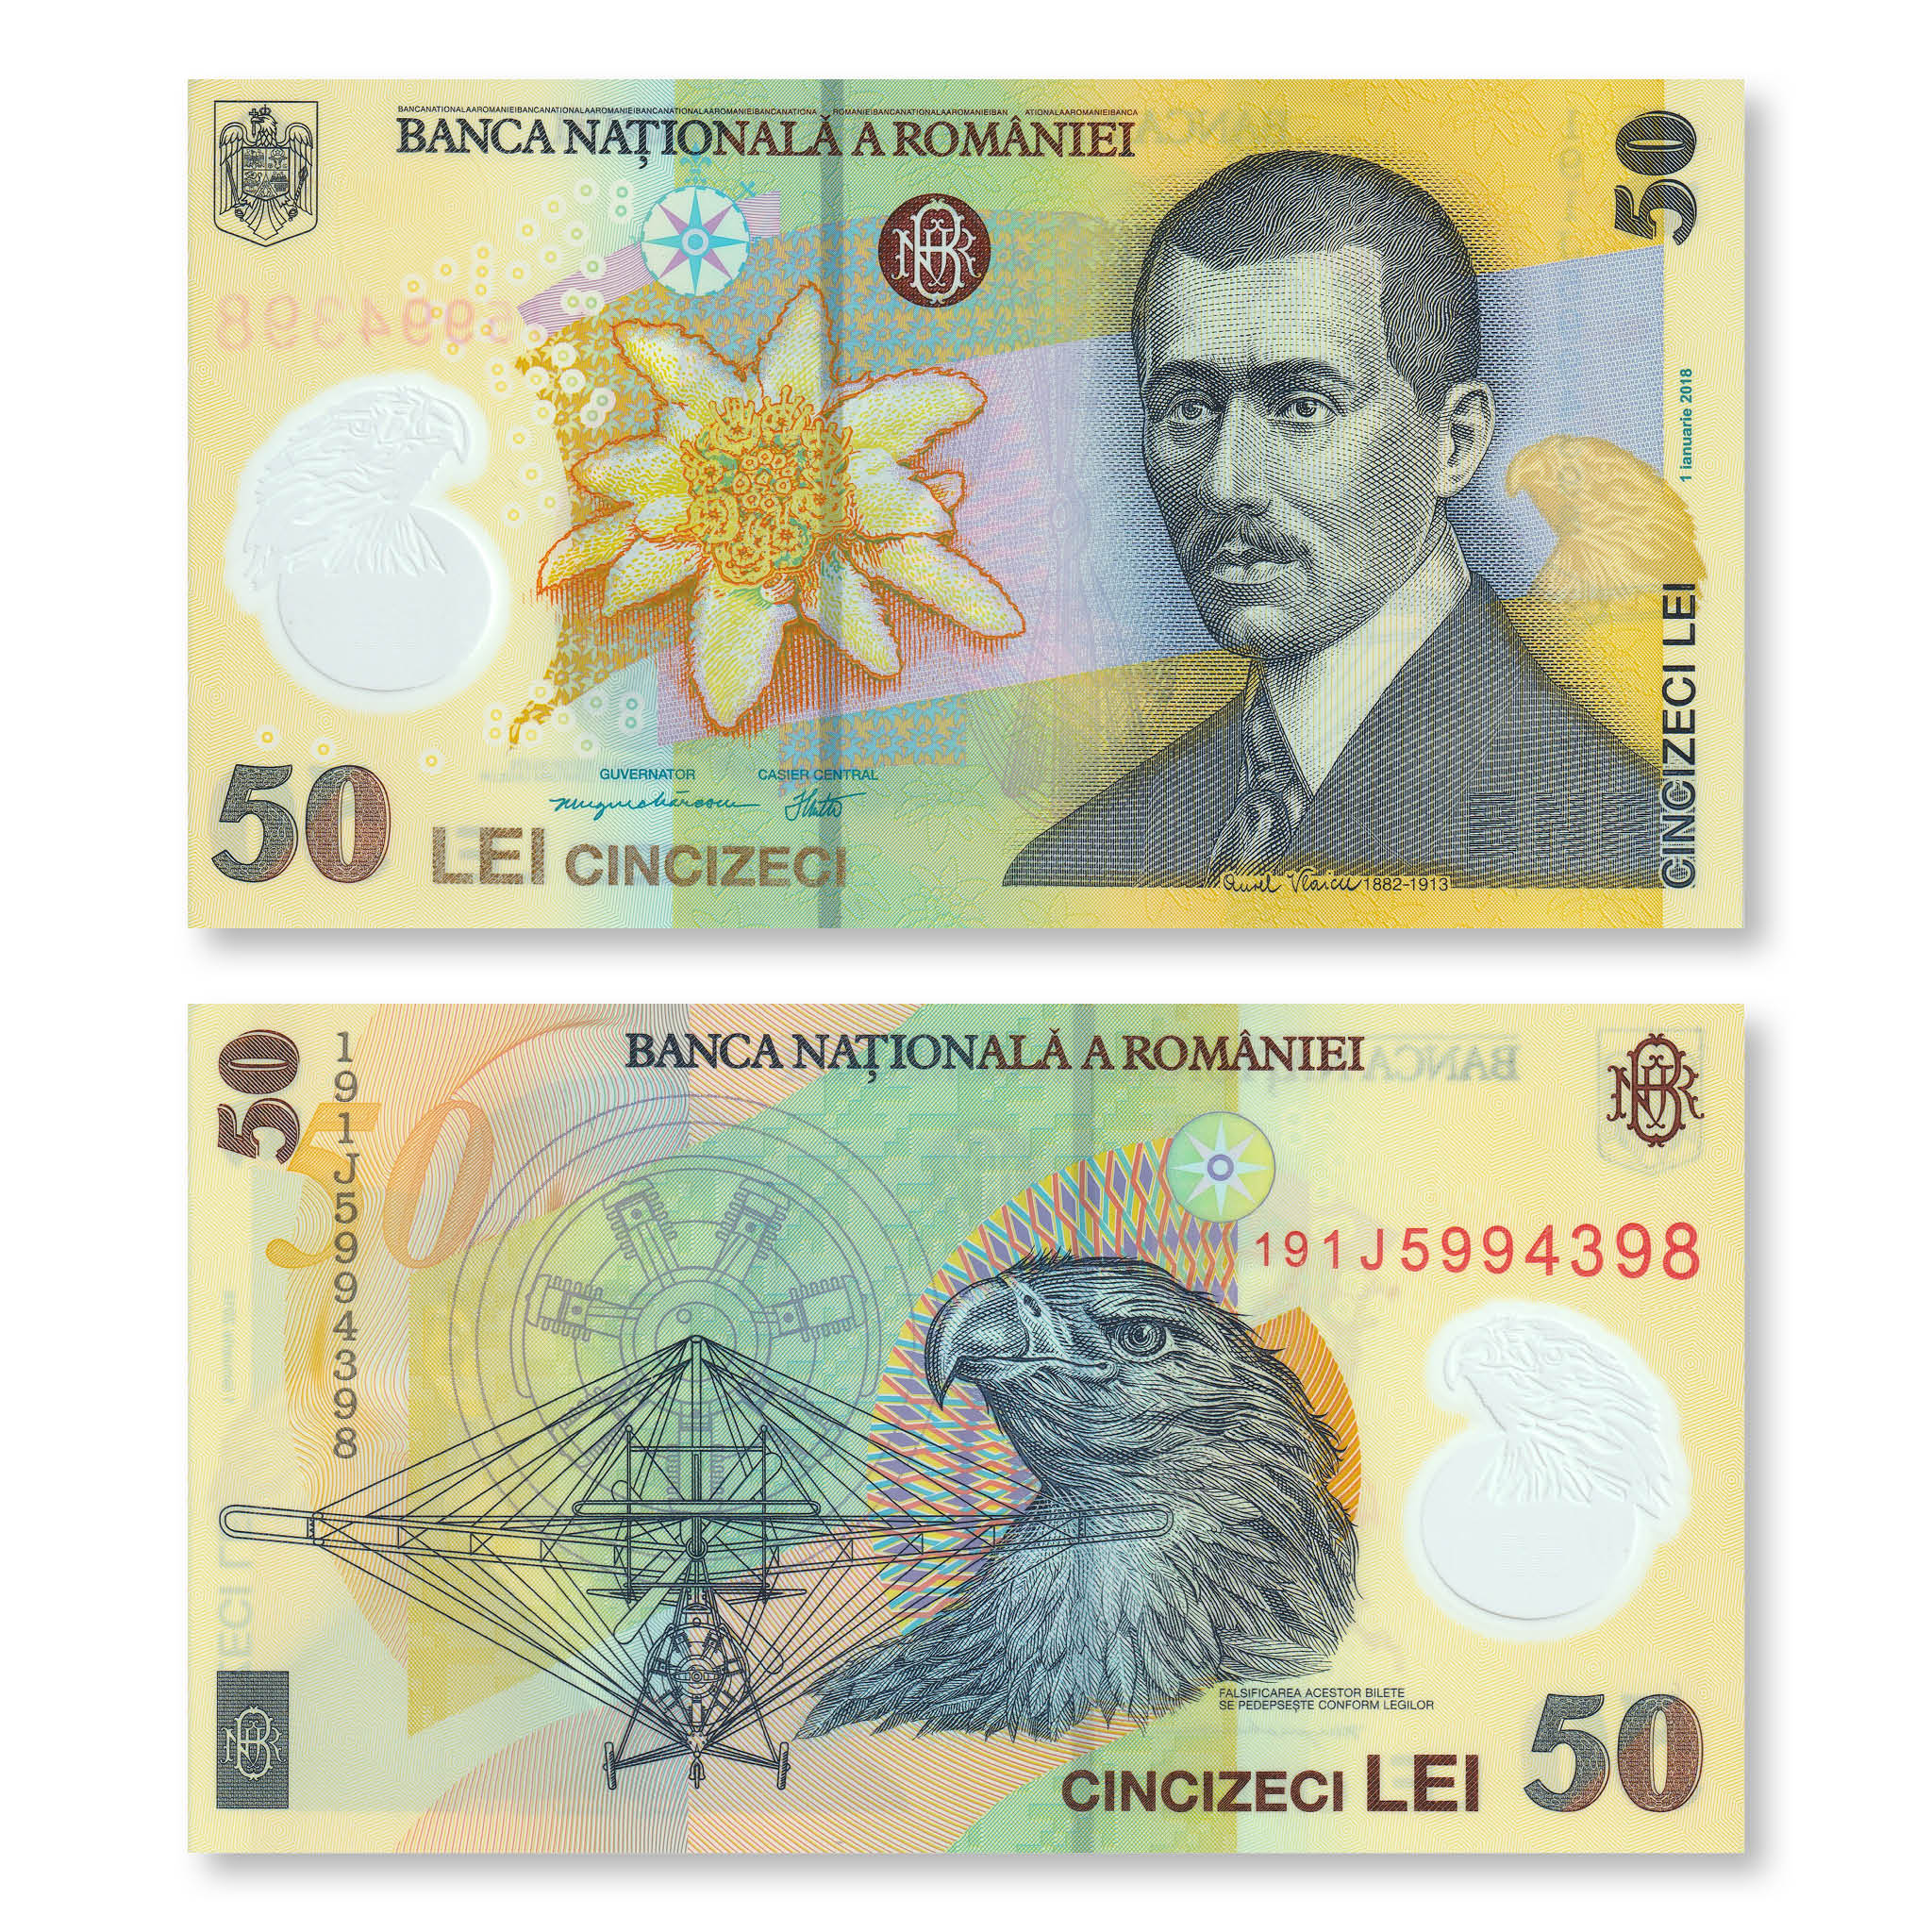 Romania 50 Lei, 2018 (2019), B289b, P120, UNC - Robert's World Money - World Banknotes